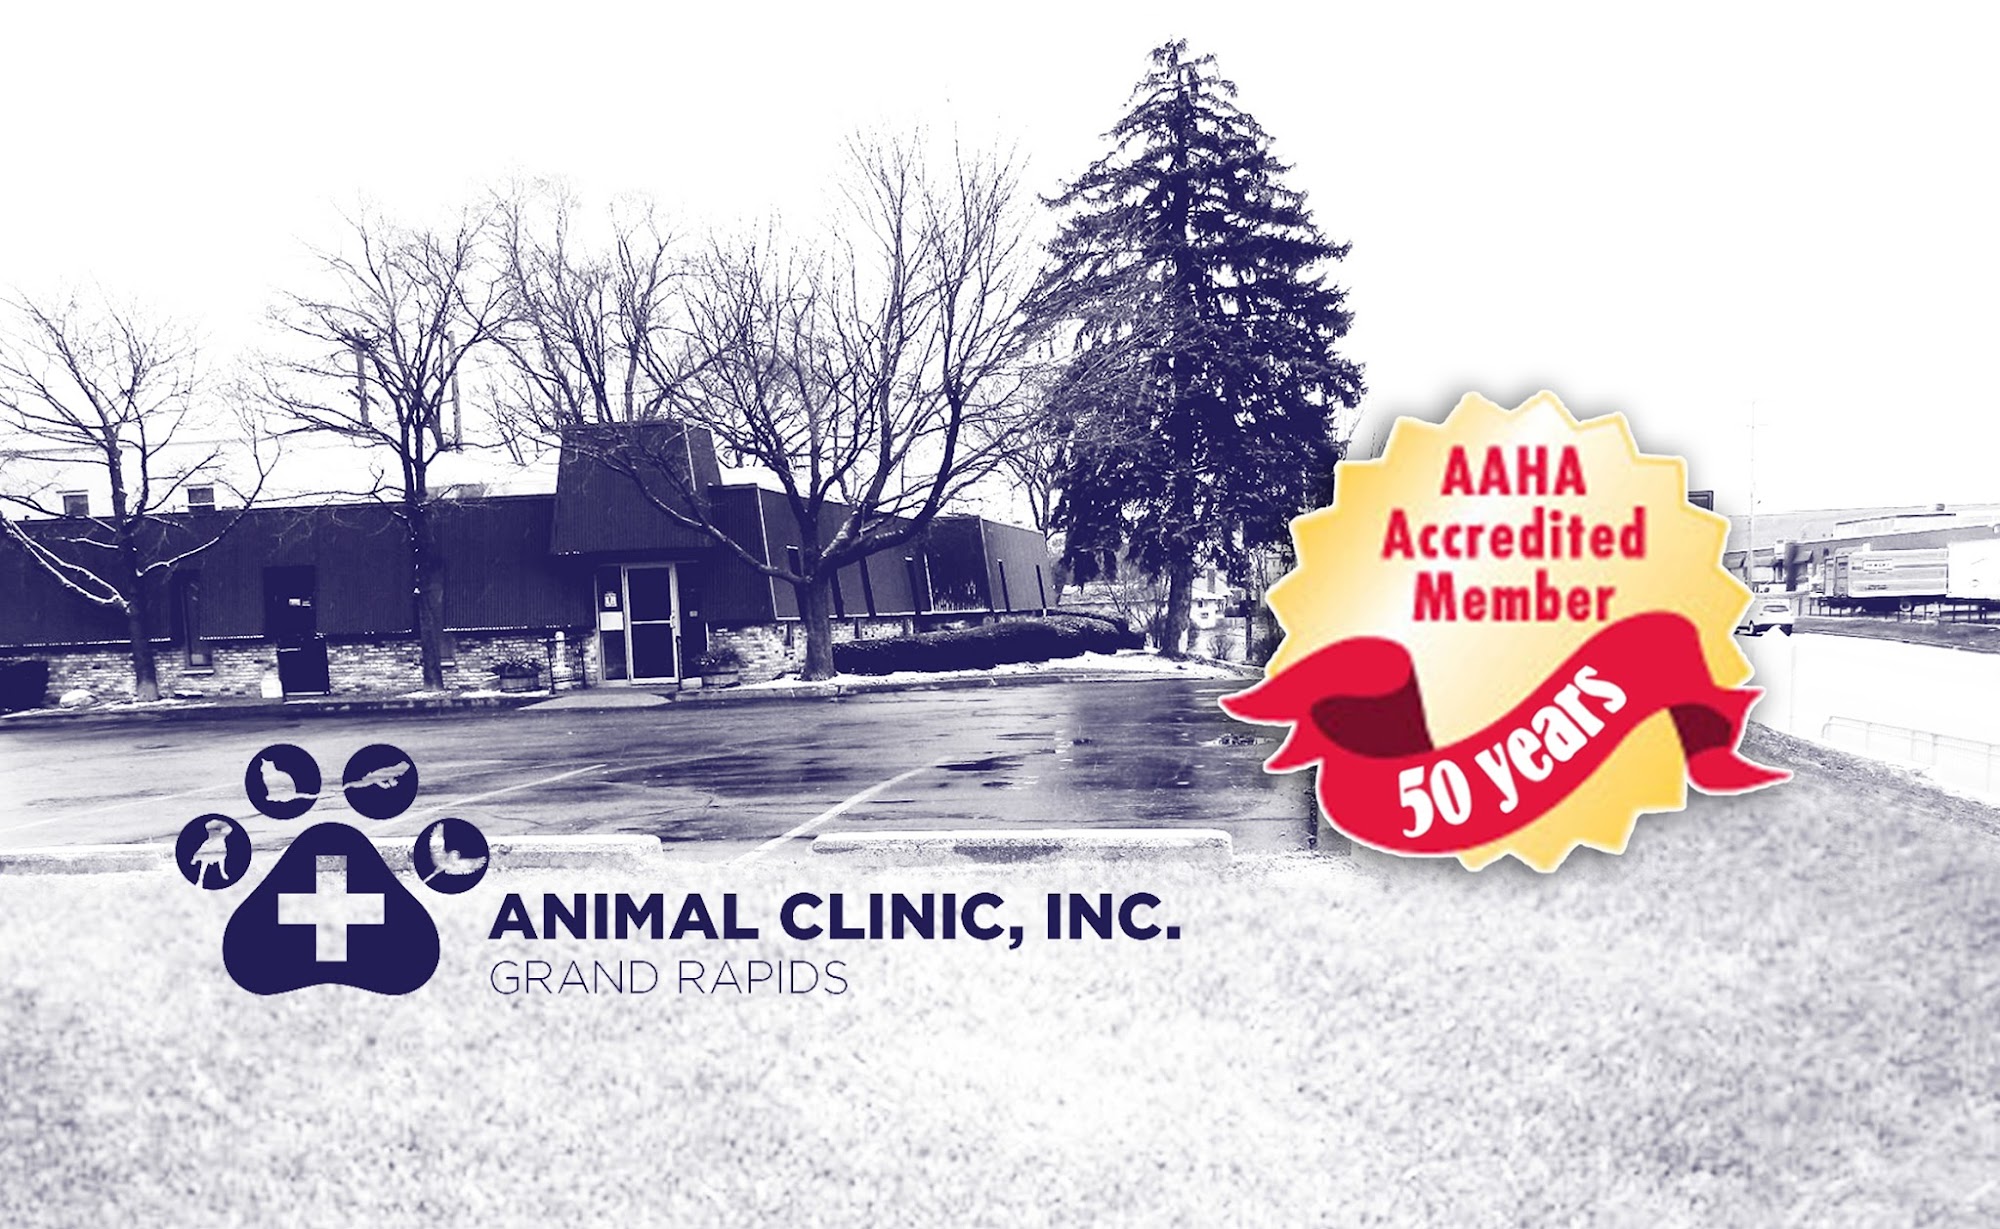 Animal Clinic, Inc. Grand Rapids